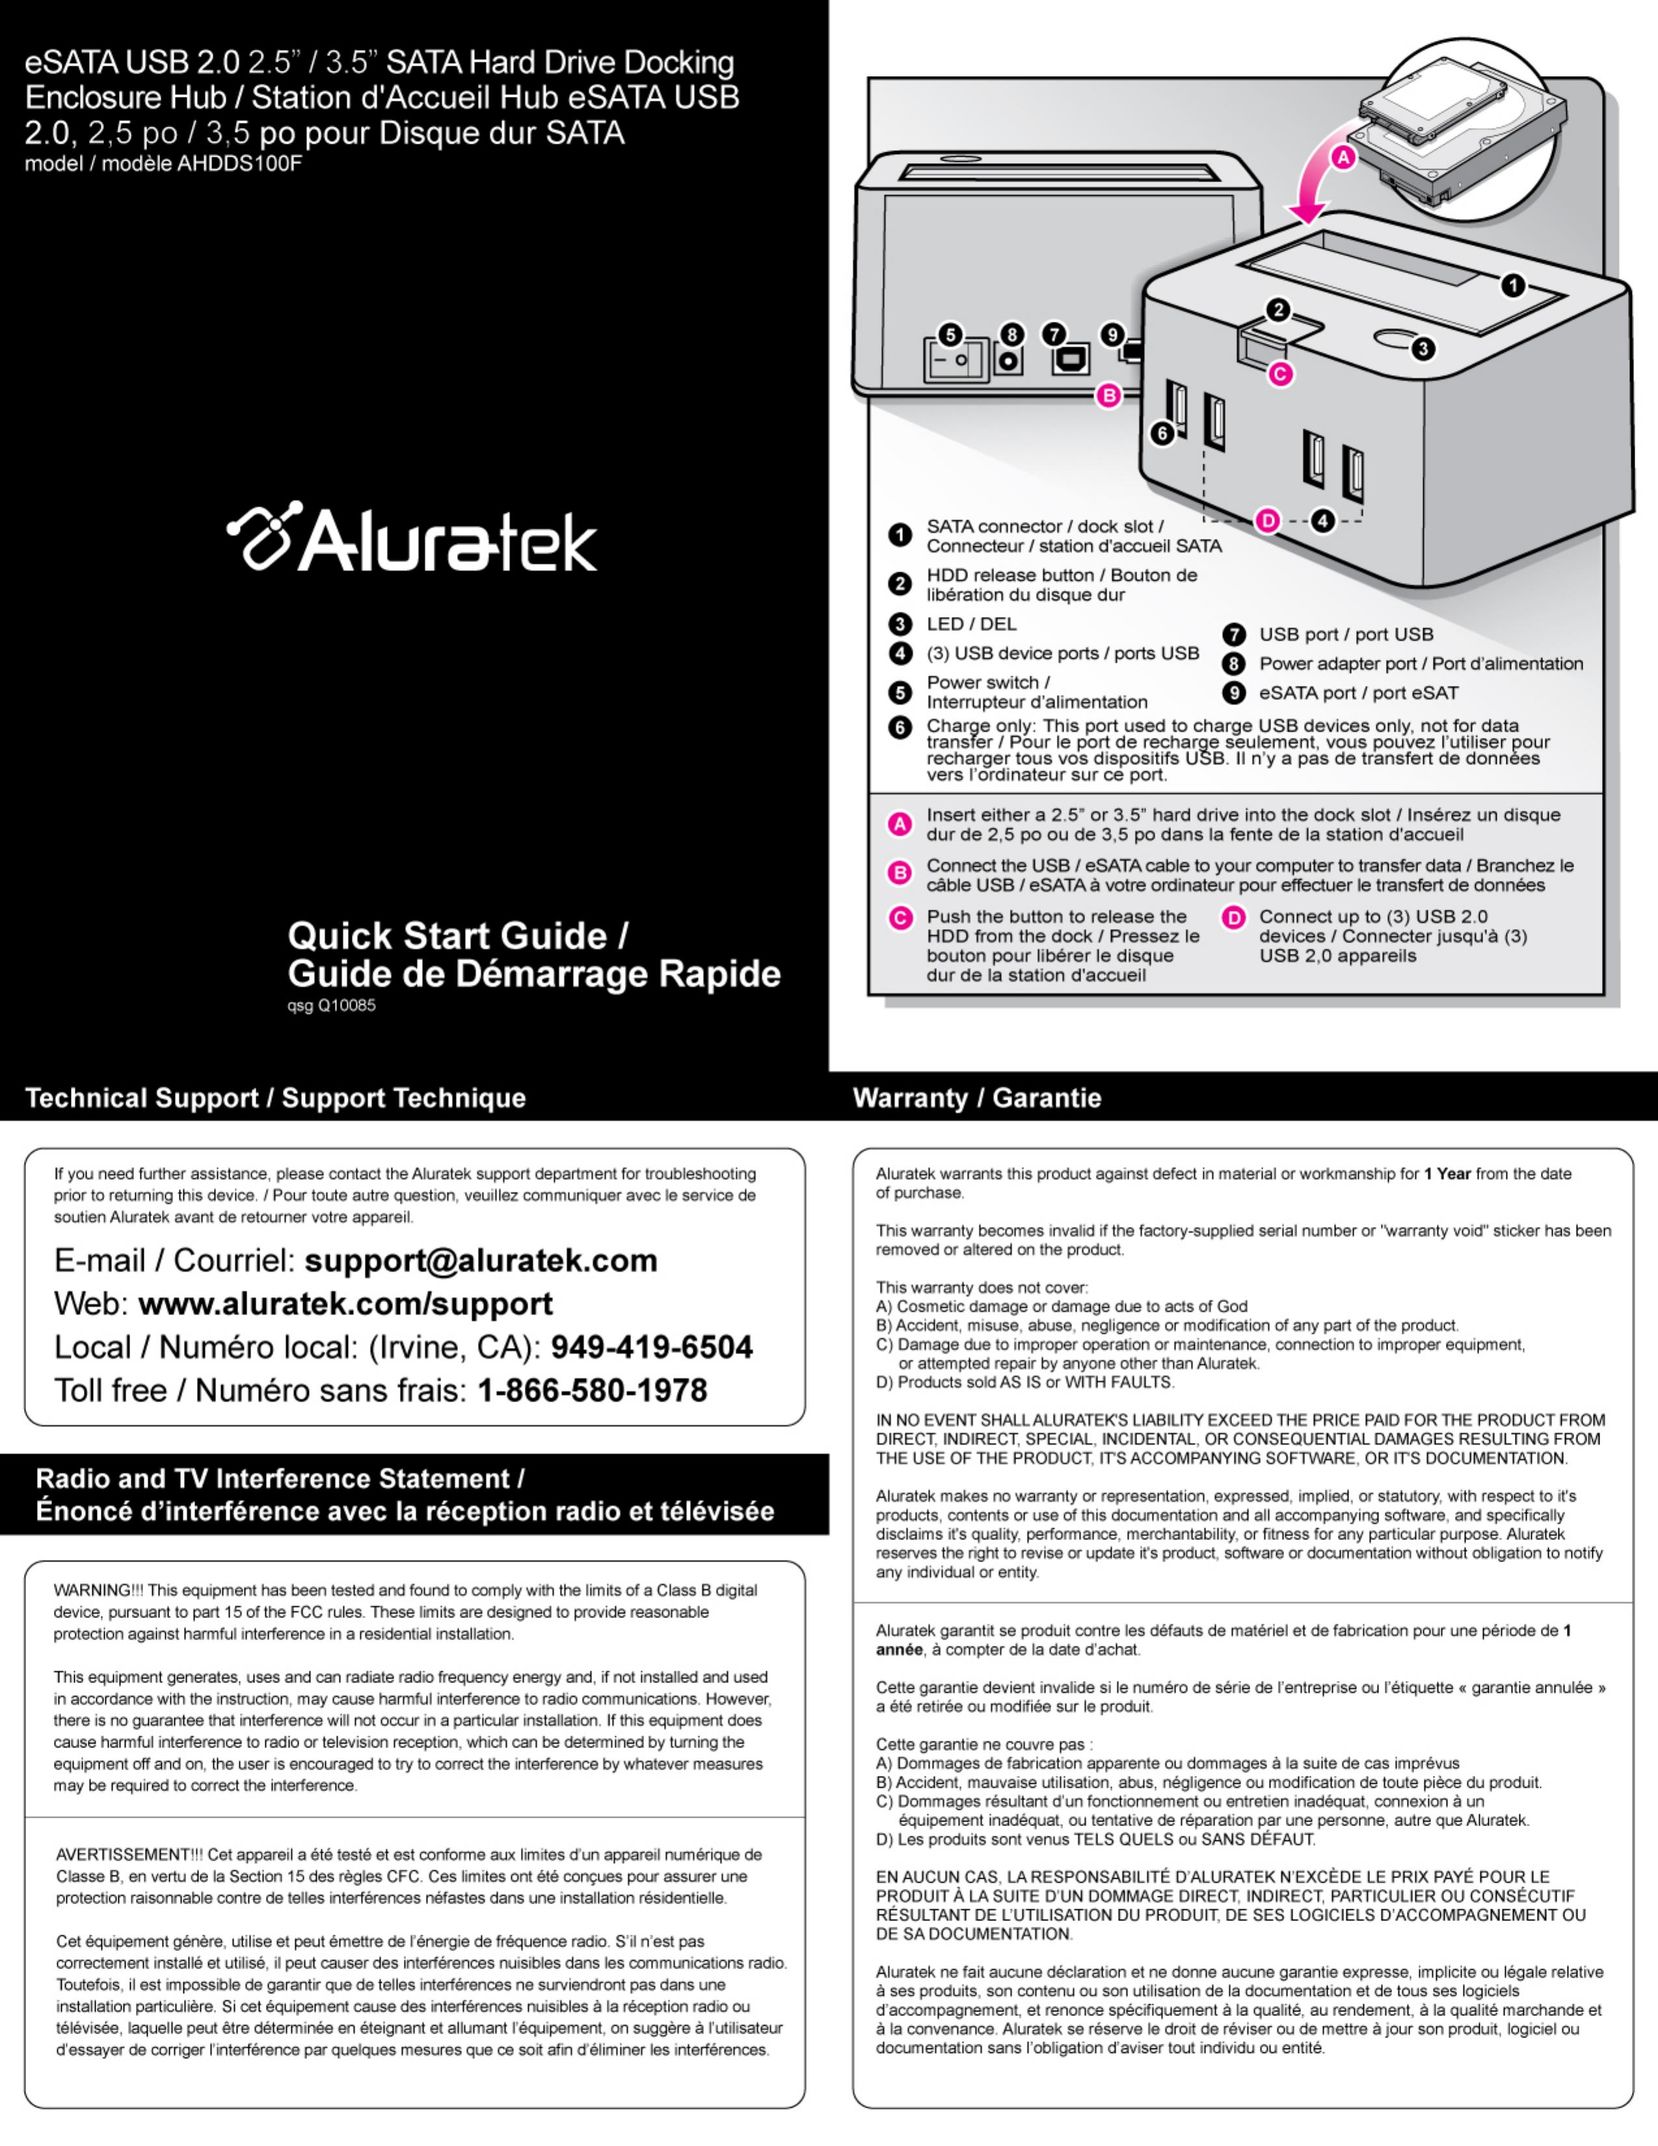 Aluratek AHDDS100F Network Card User Manual